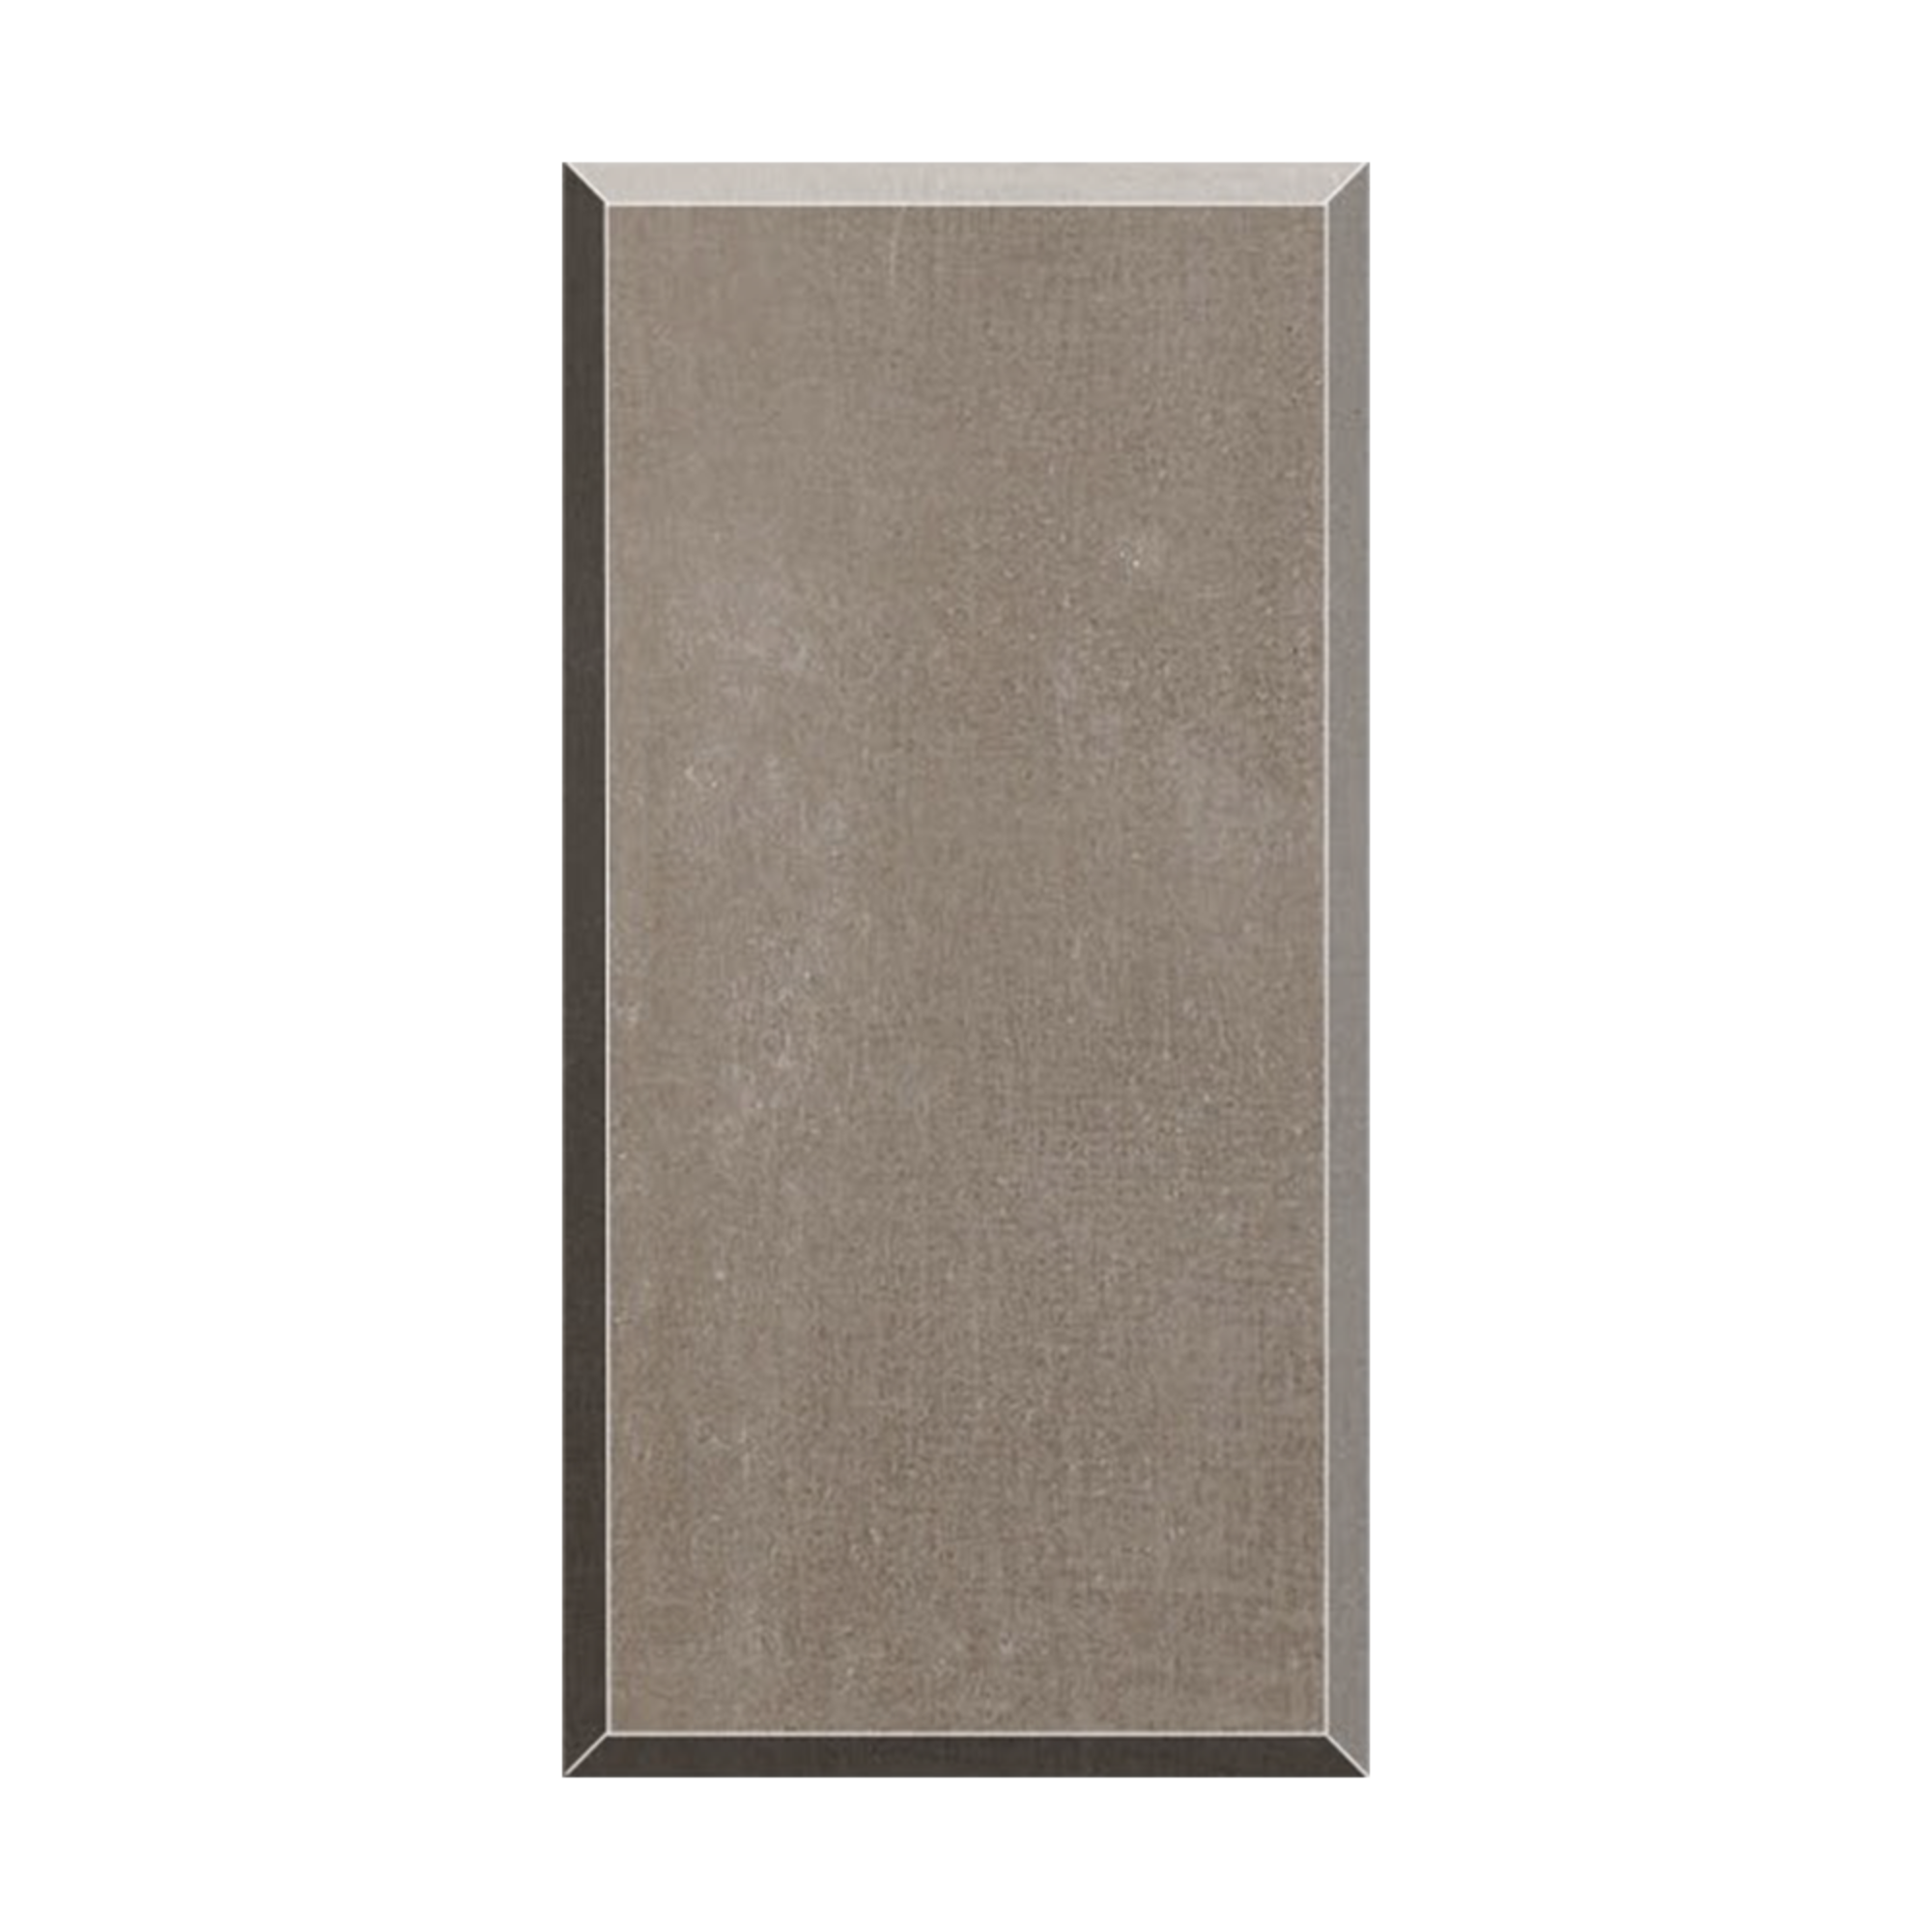 Industrial Style Concrete Board B